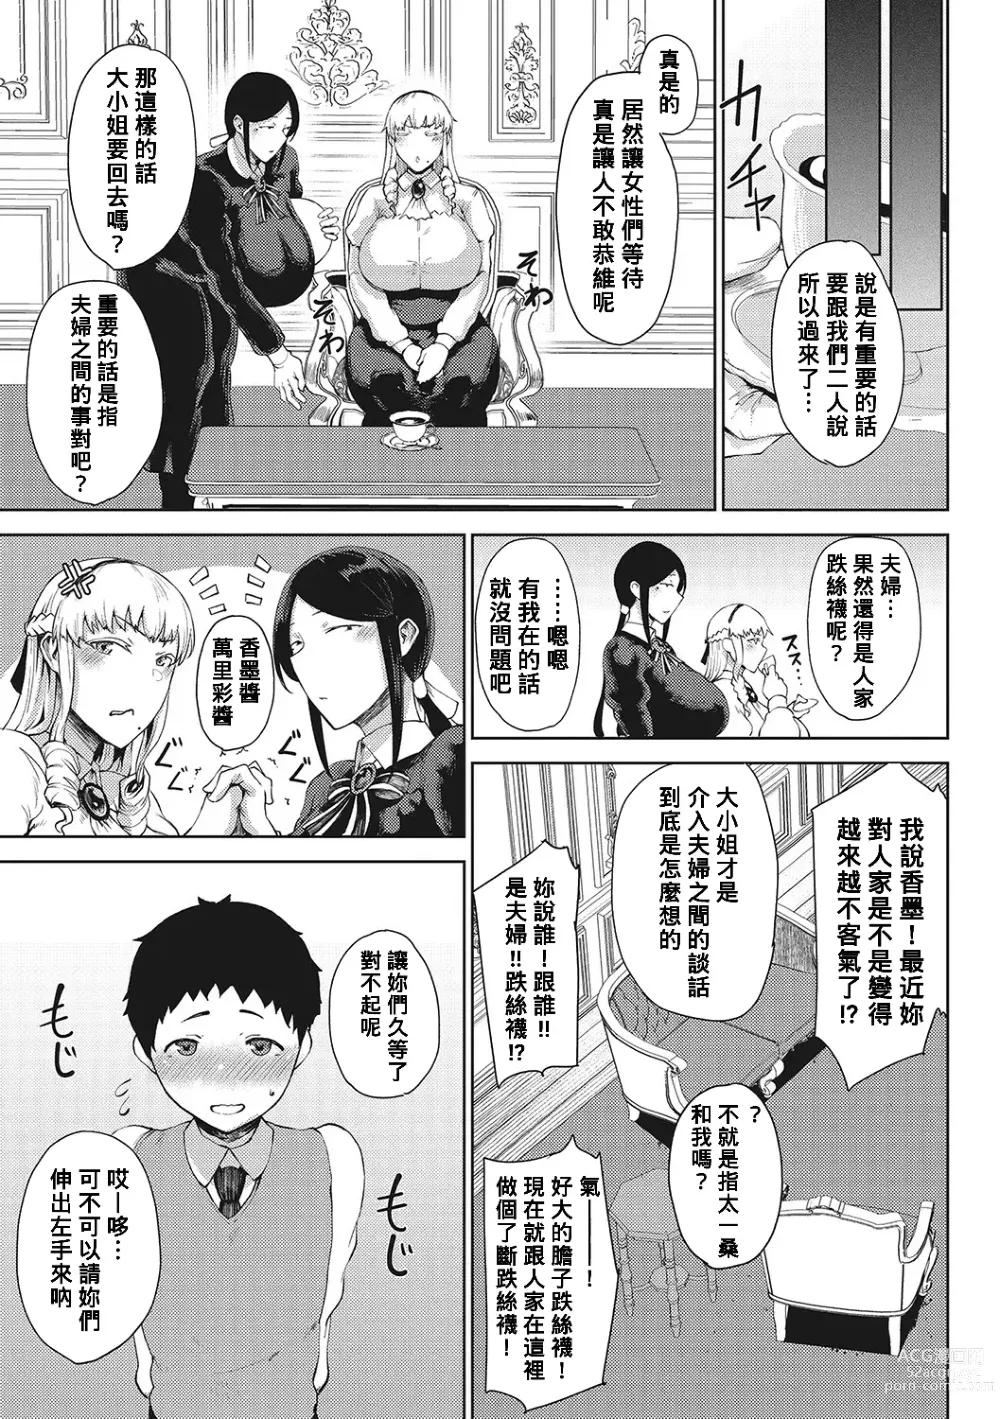 Page 24 of manga Saitan no Yakusoku Koupen